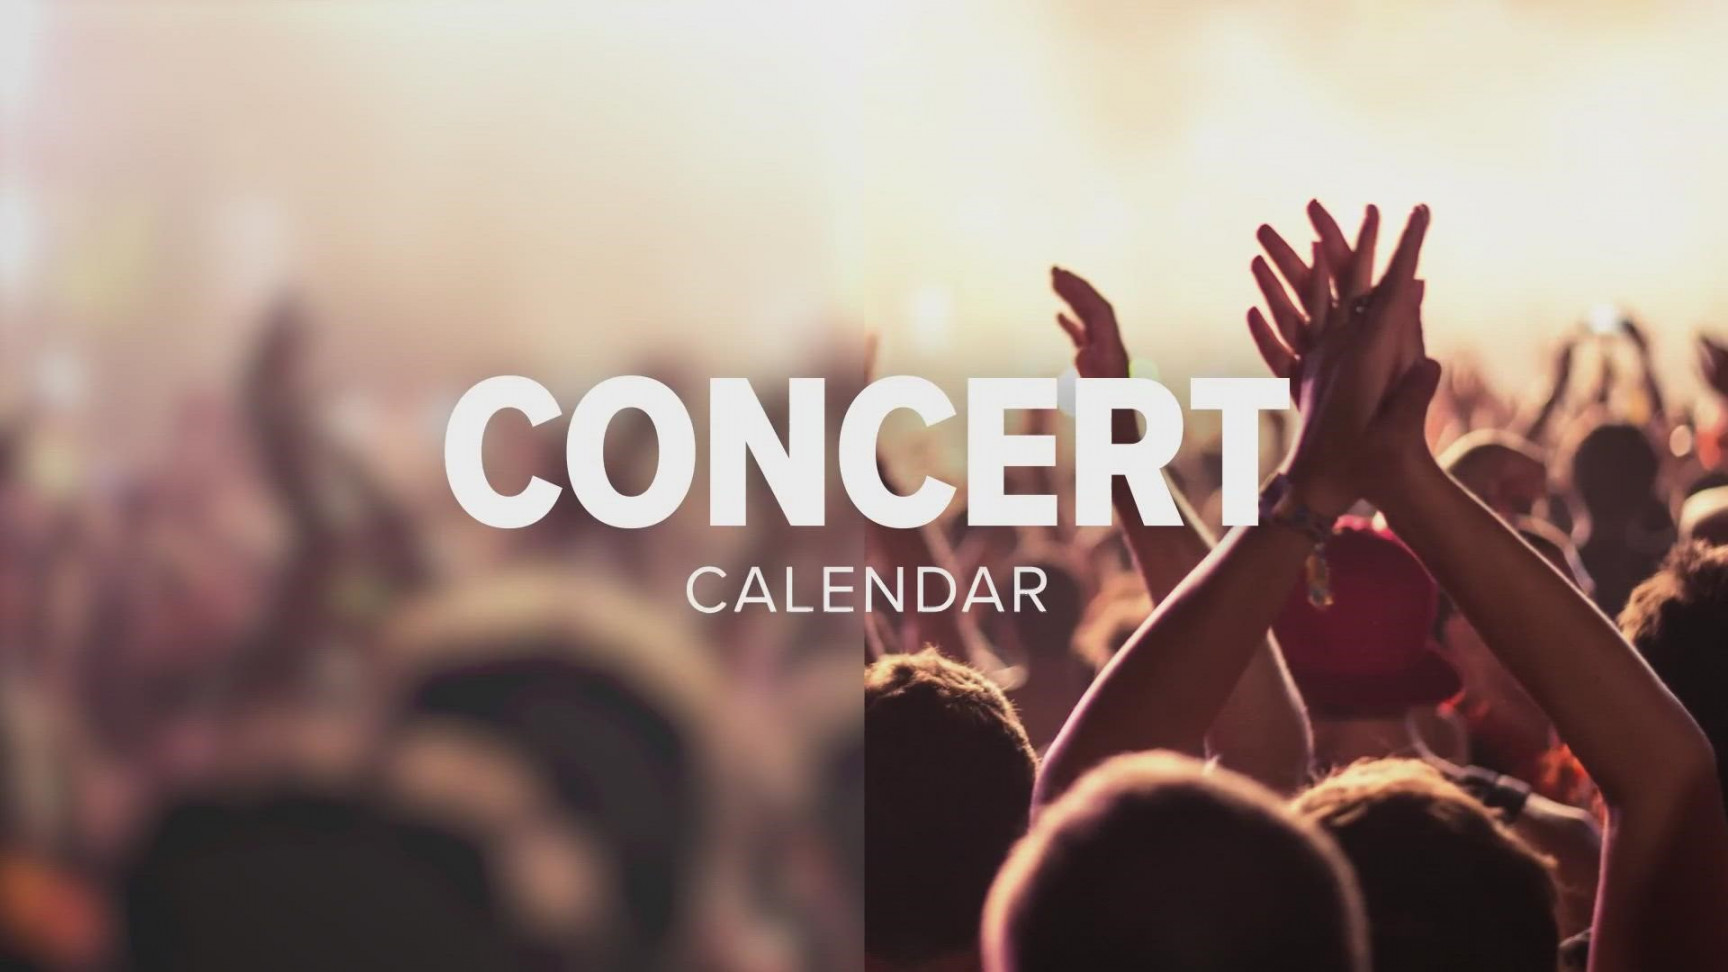 Concert Calendar: Fall Out Boy, Lil Wayne and Maren Morris